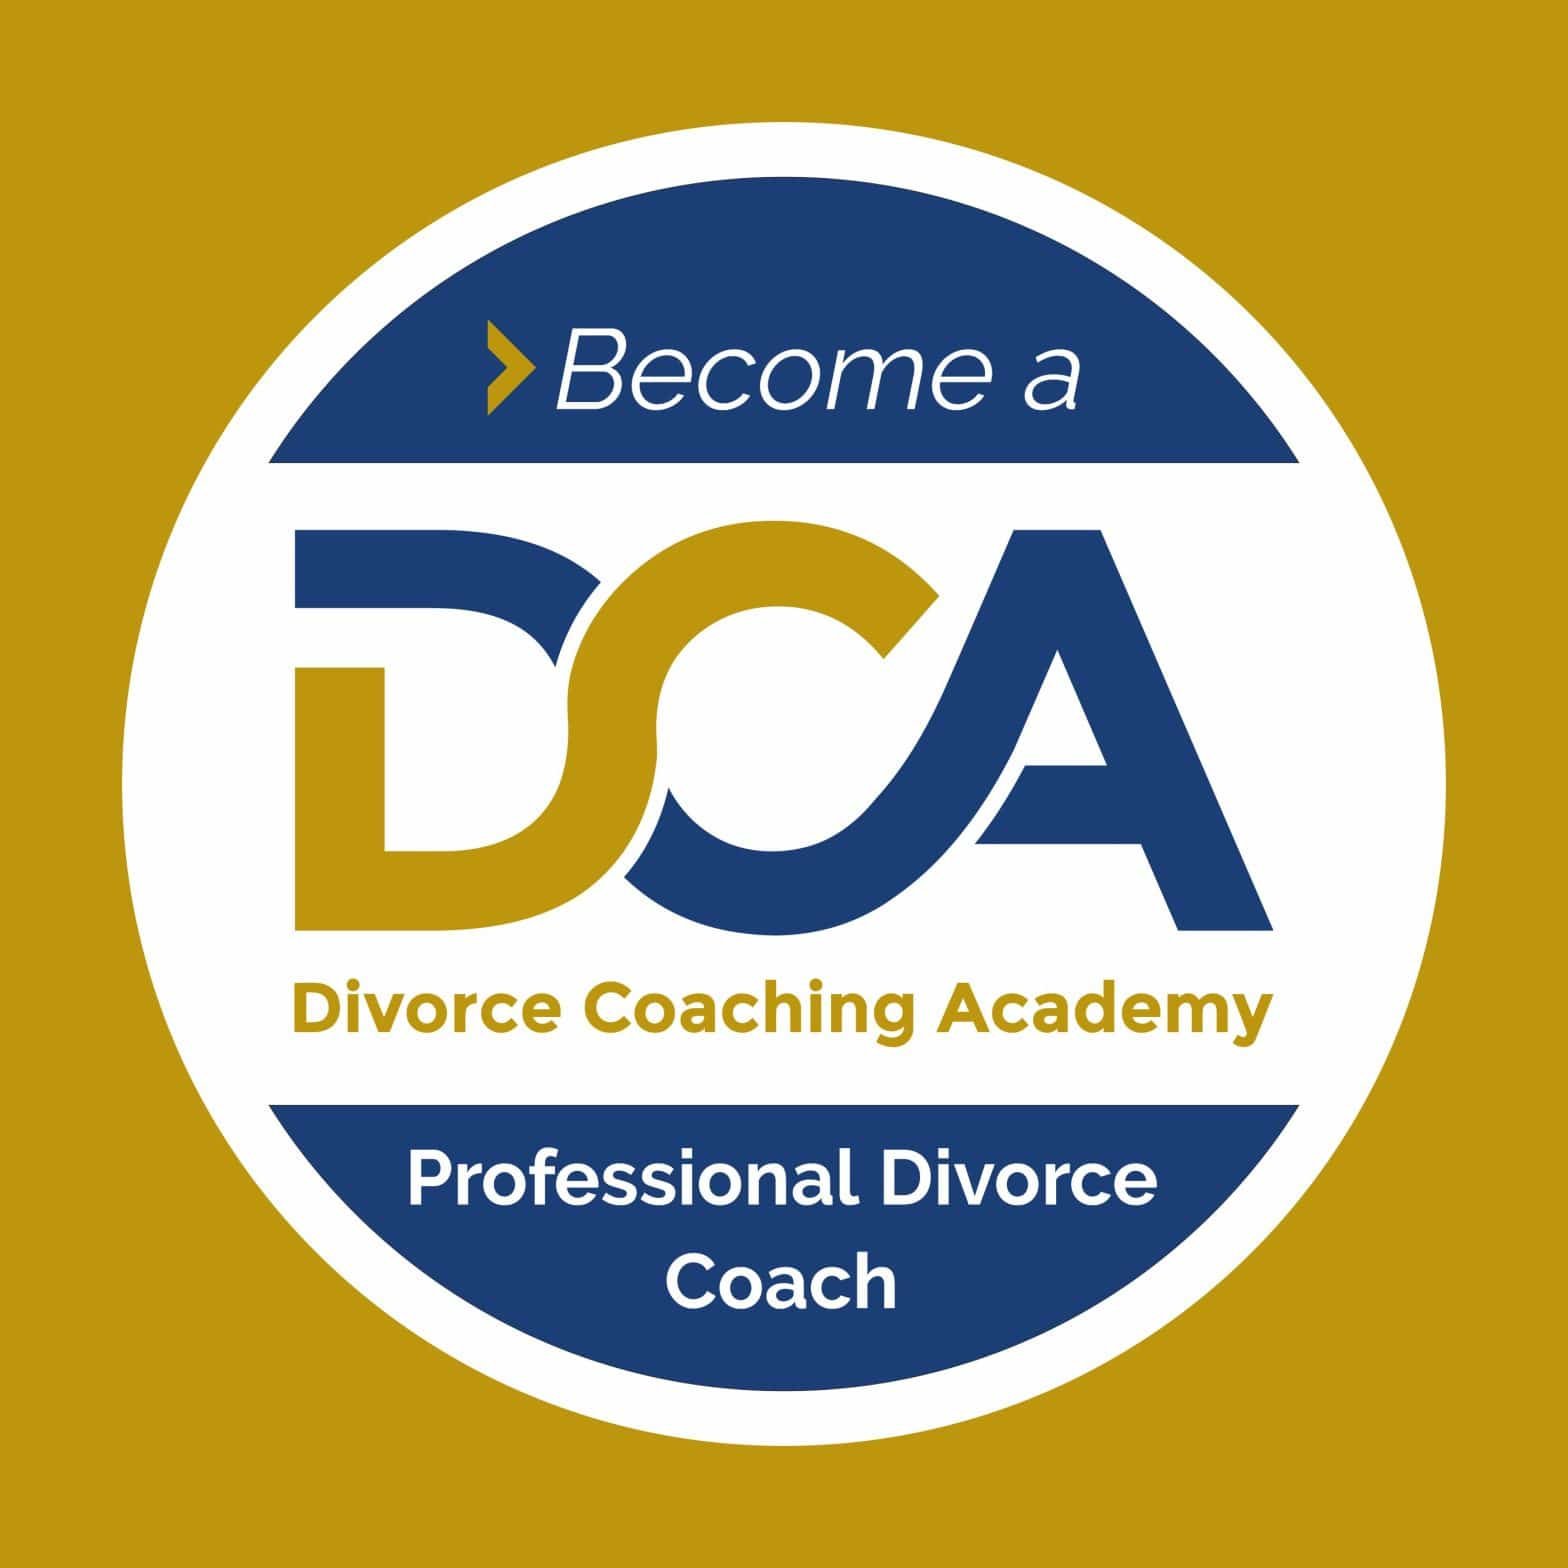 The Divorce Coaching Academy logo